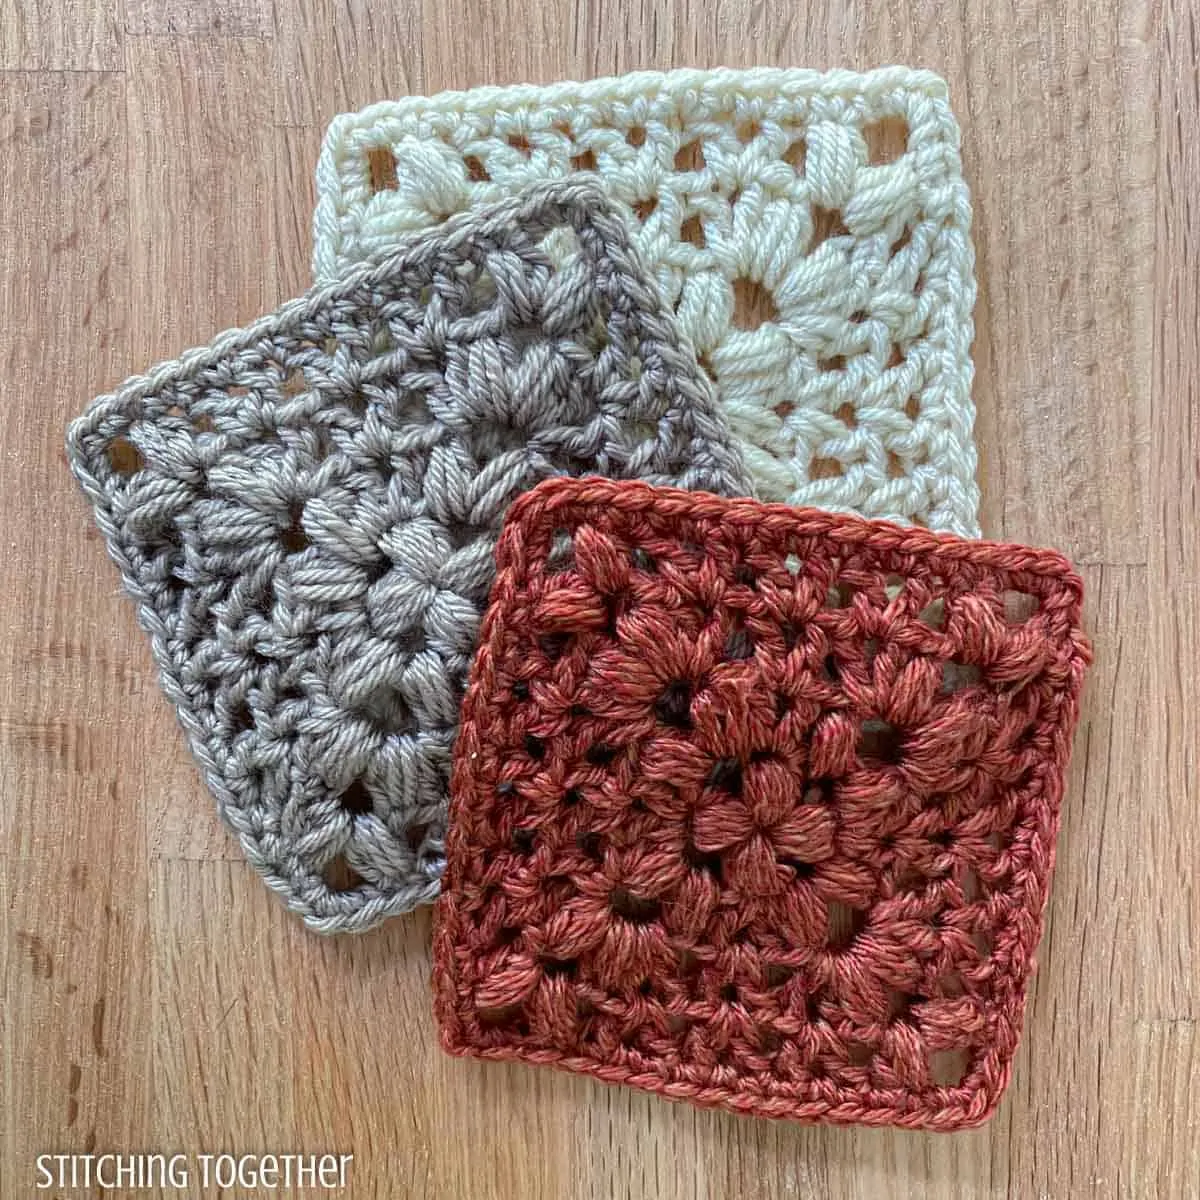 11 Different & Unique Granny Square Crochet Patterns (FREE